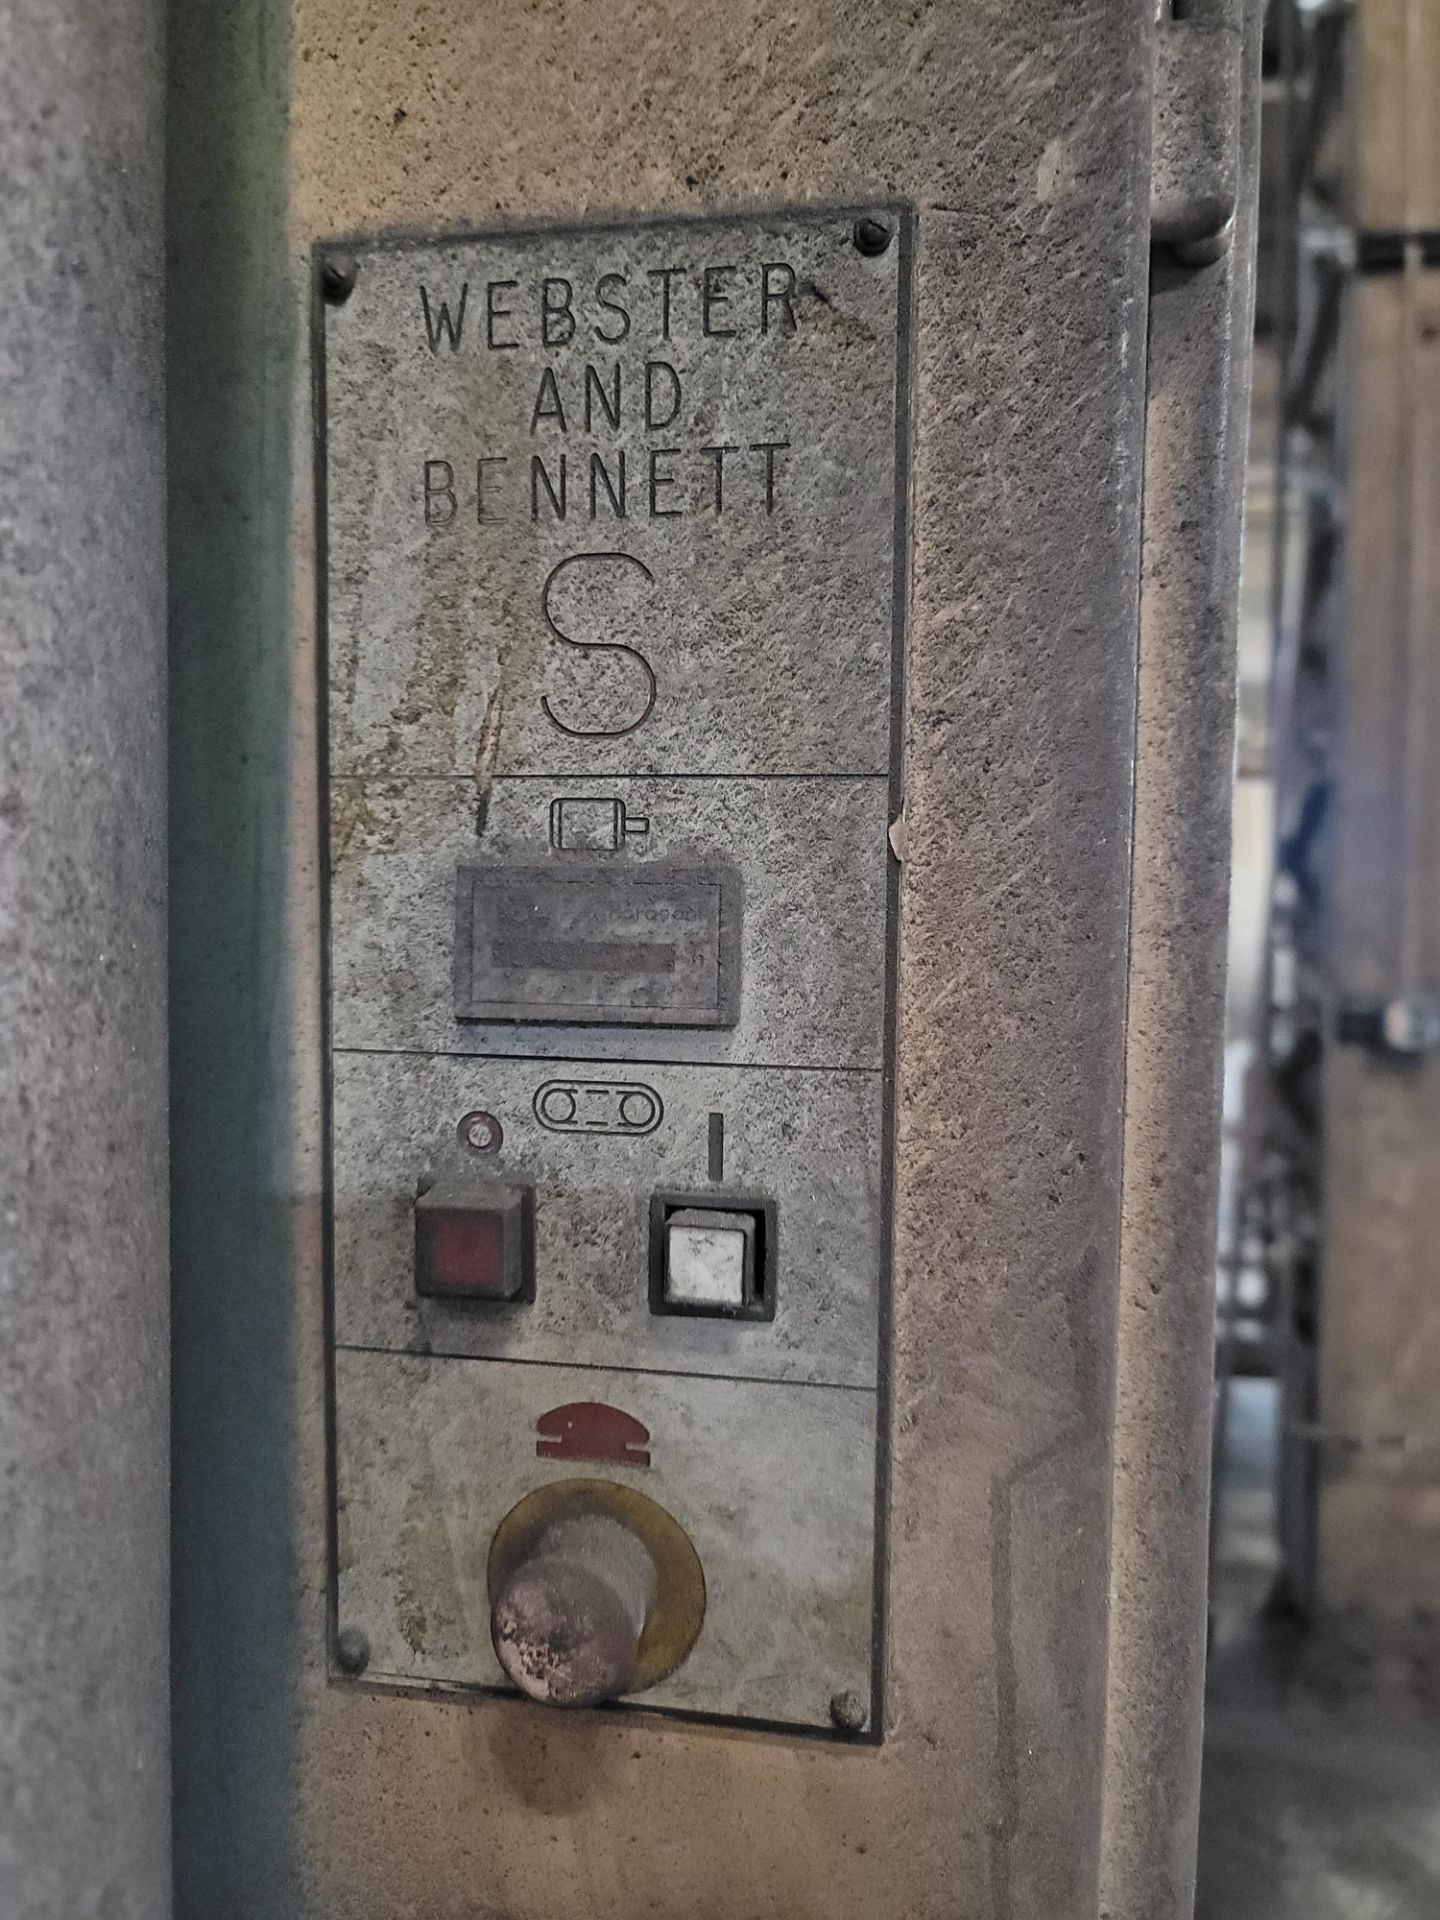 Webster Bennett Series “S” CNC Vertical Boring Mill - Image 6 of 6